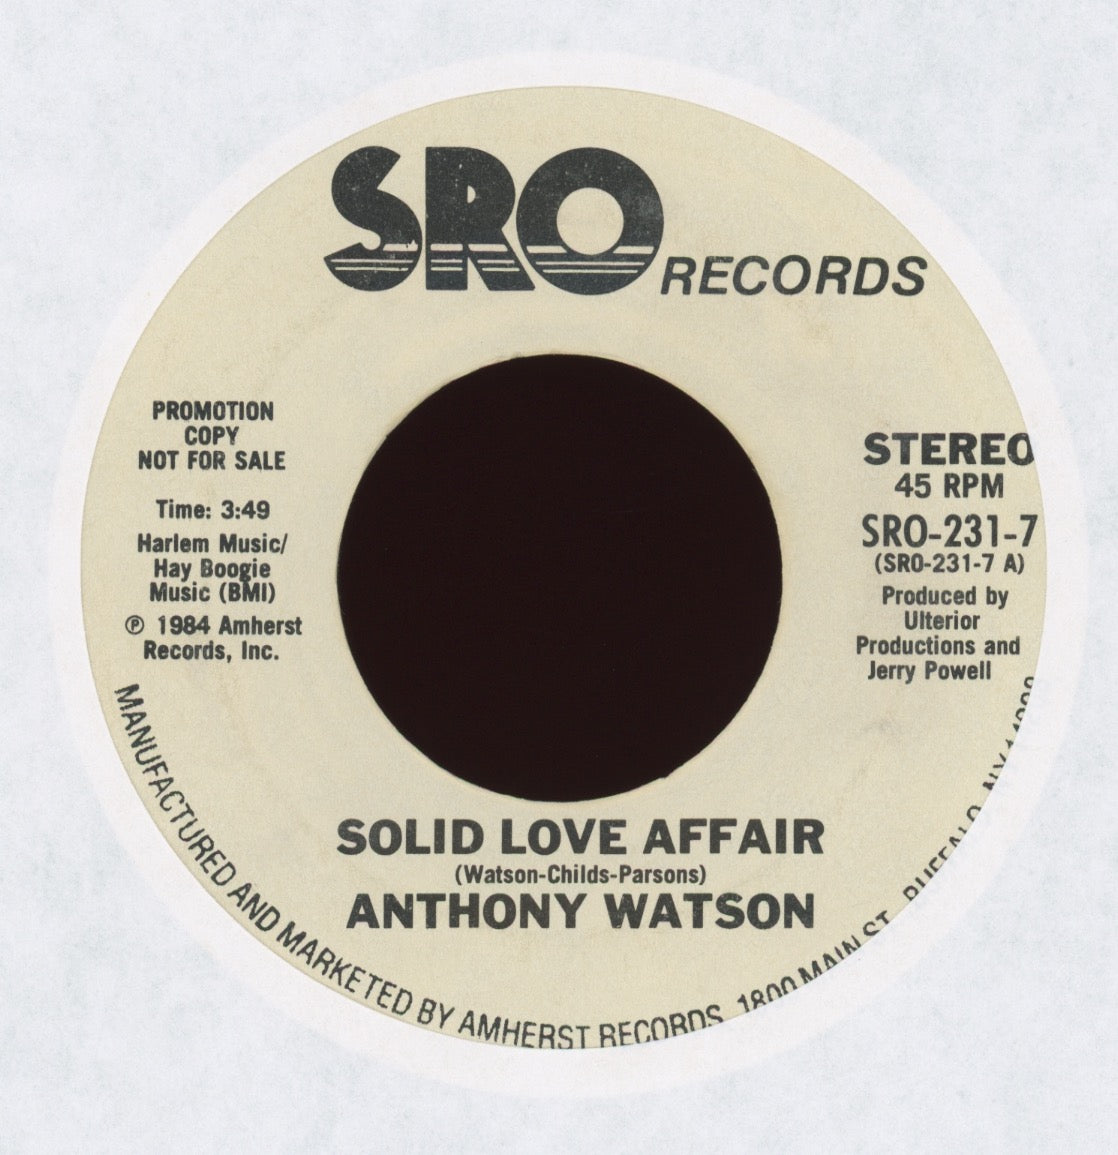 Anthony Watson - Solid Love Affair on SRO Promo